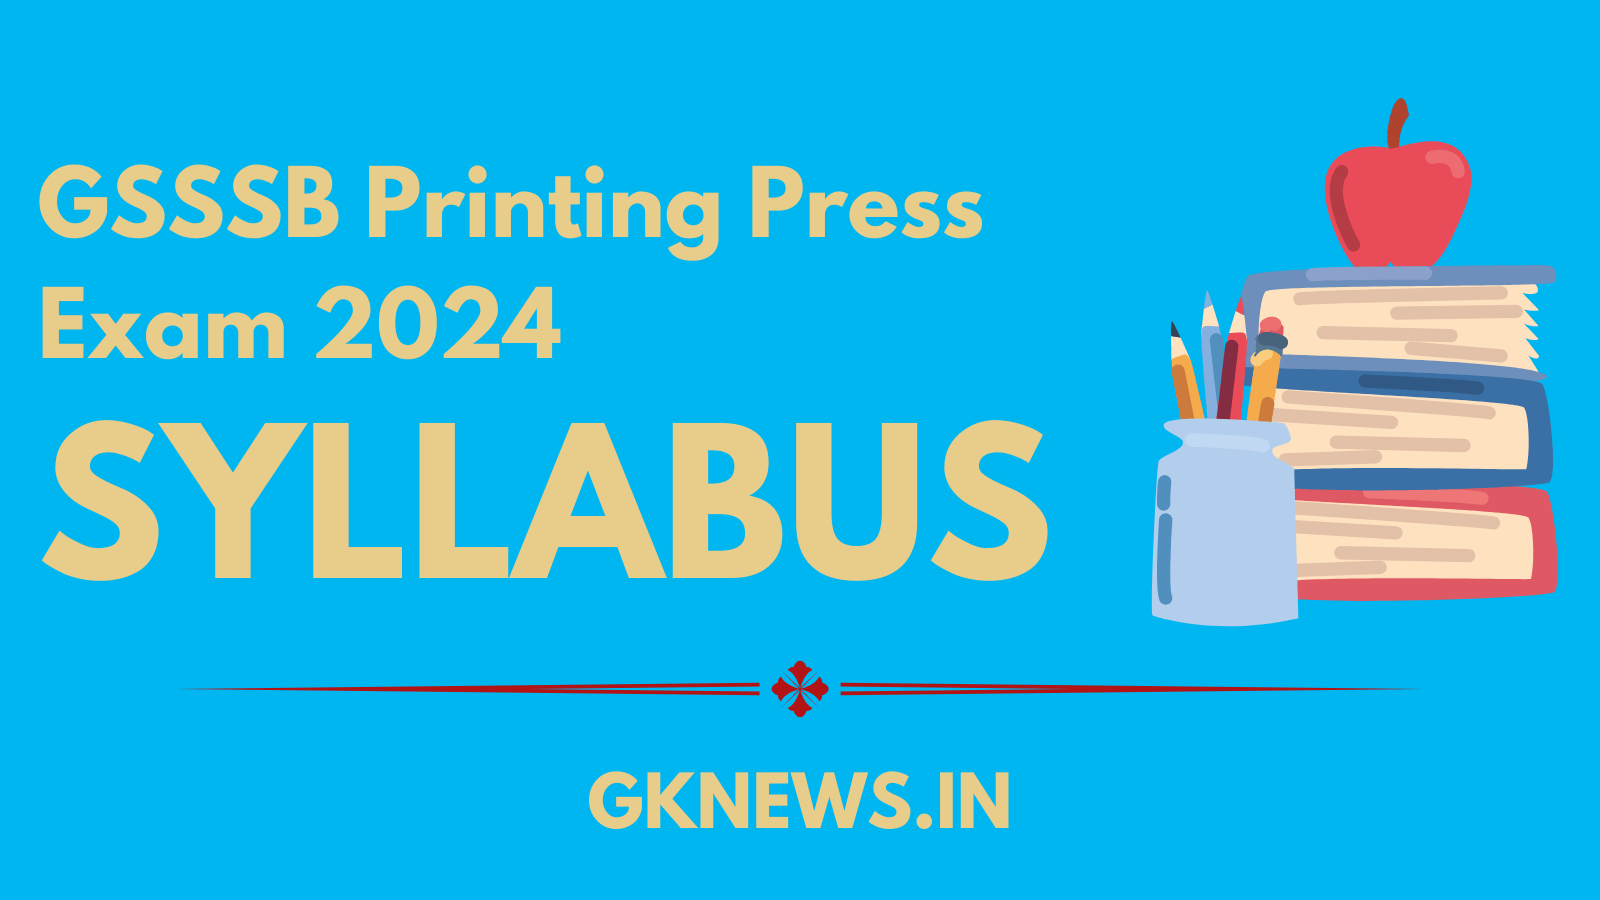 GSSSB Printing Press Syllabus 2024